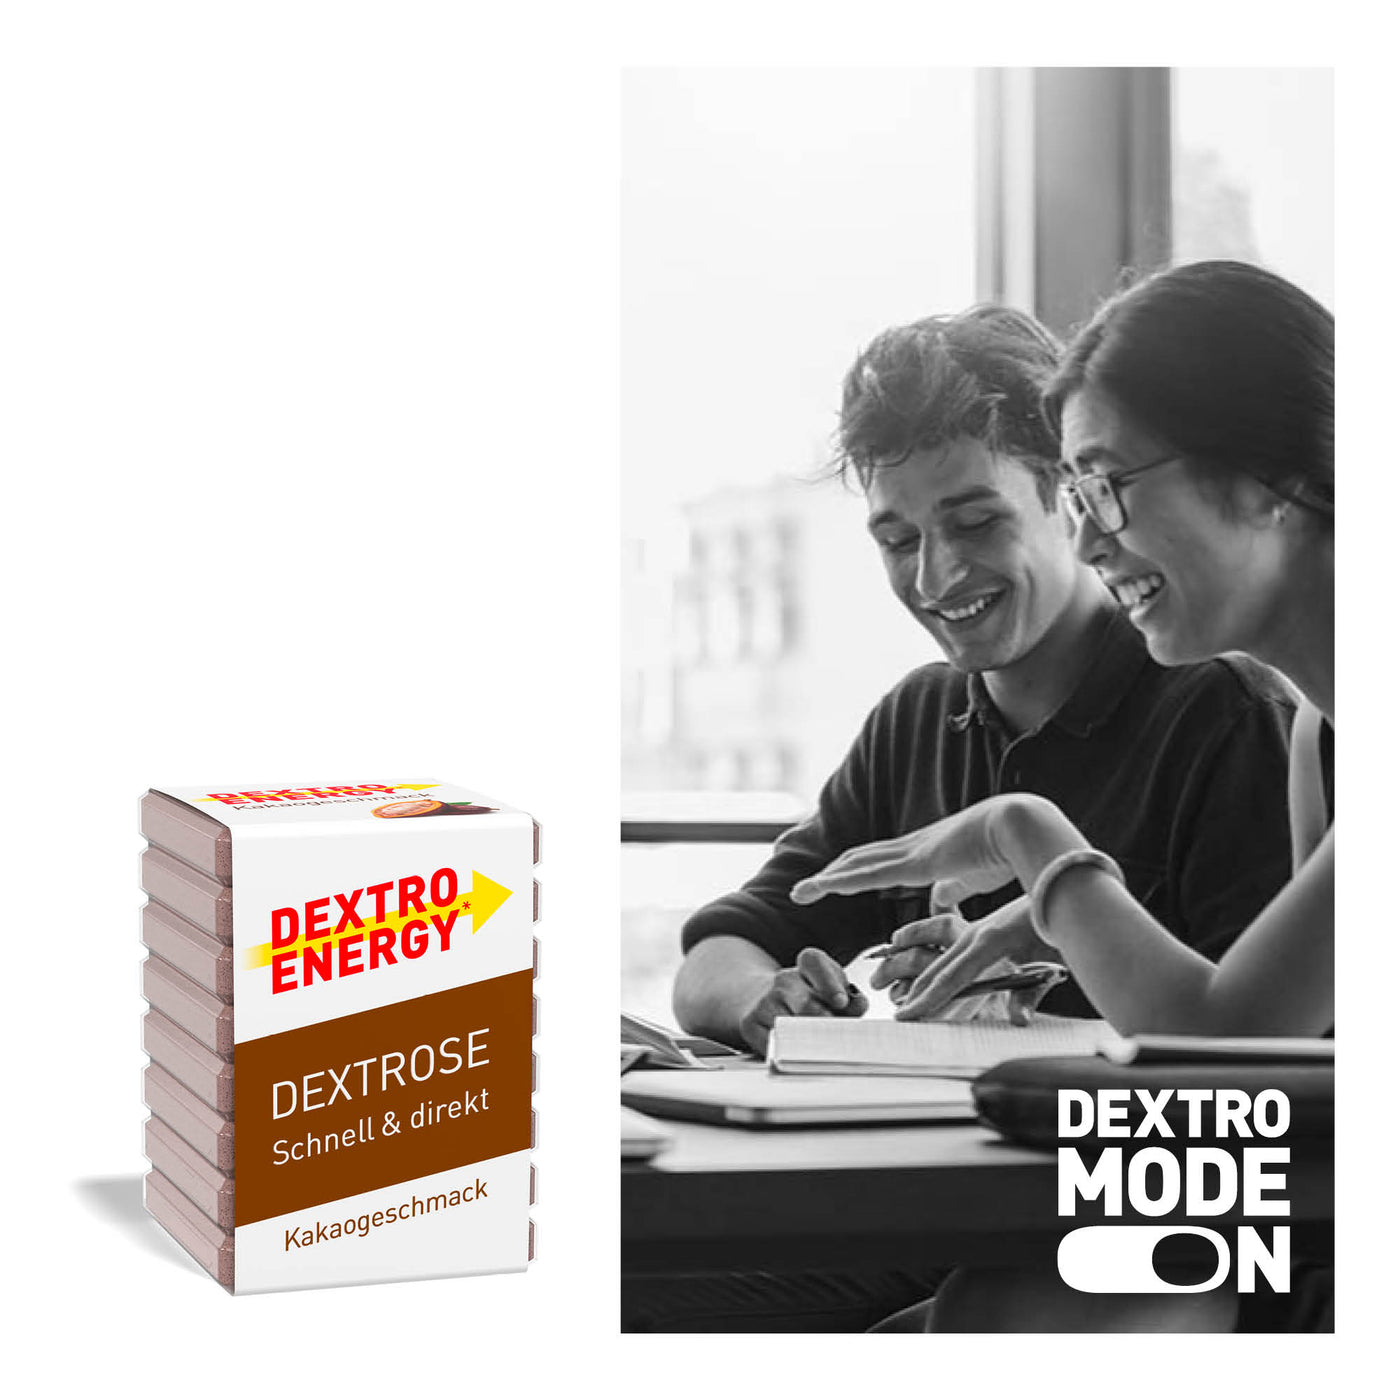 Dextrose Kakao